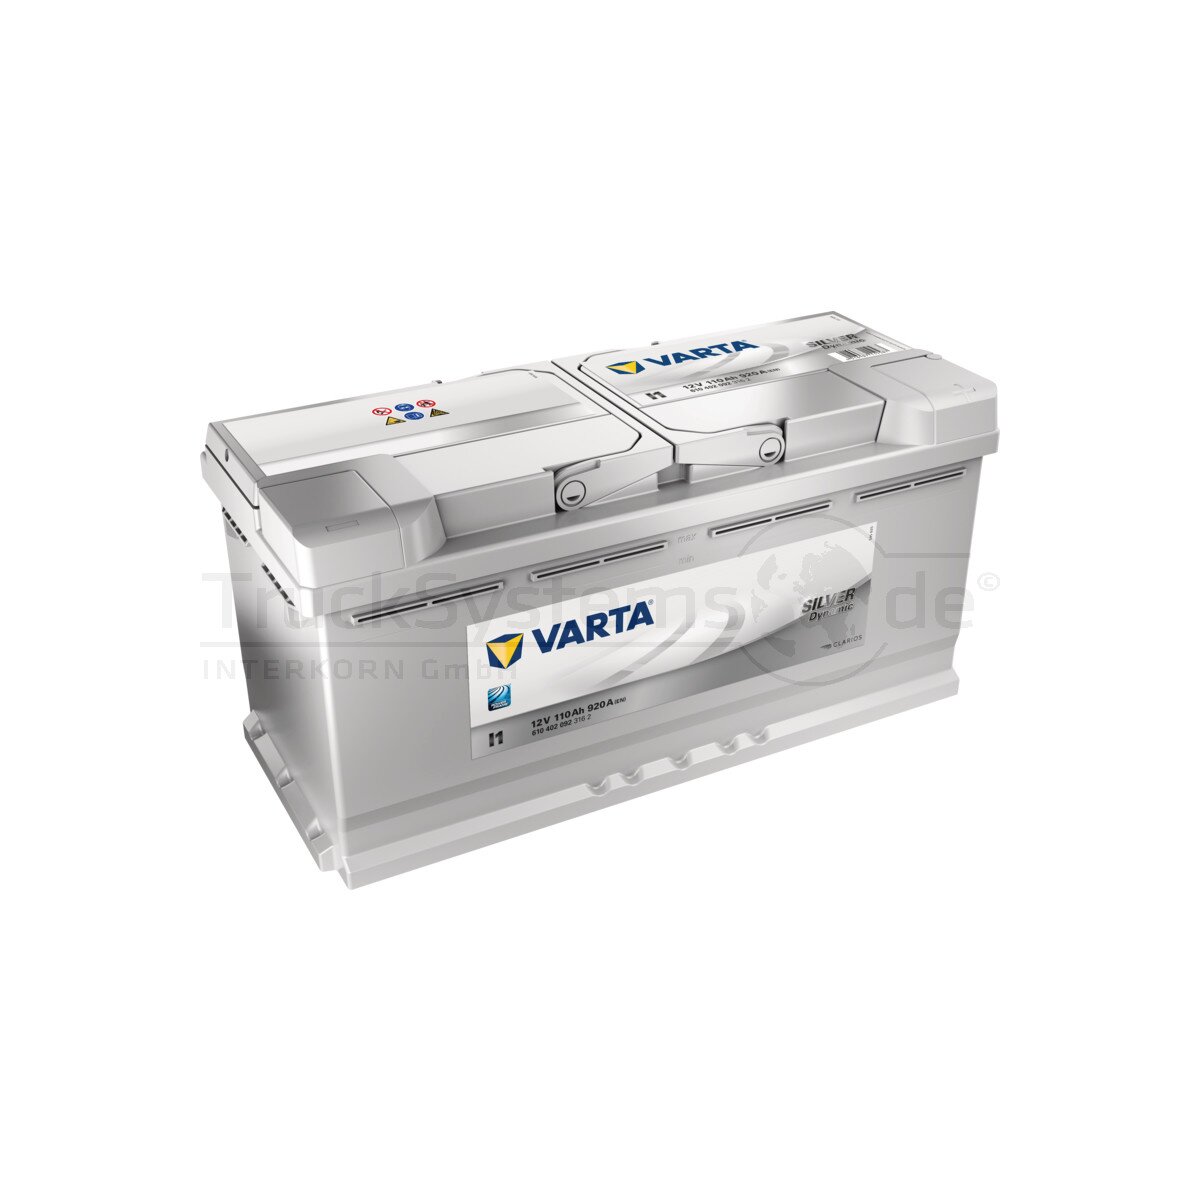 VARTA Batterie SILVER Dynamic I1 6104020923162 - 23323603